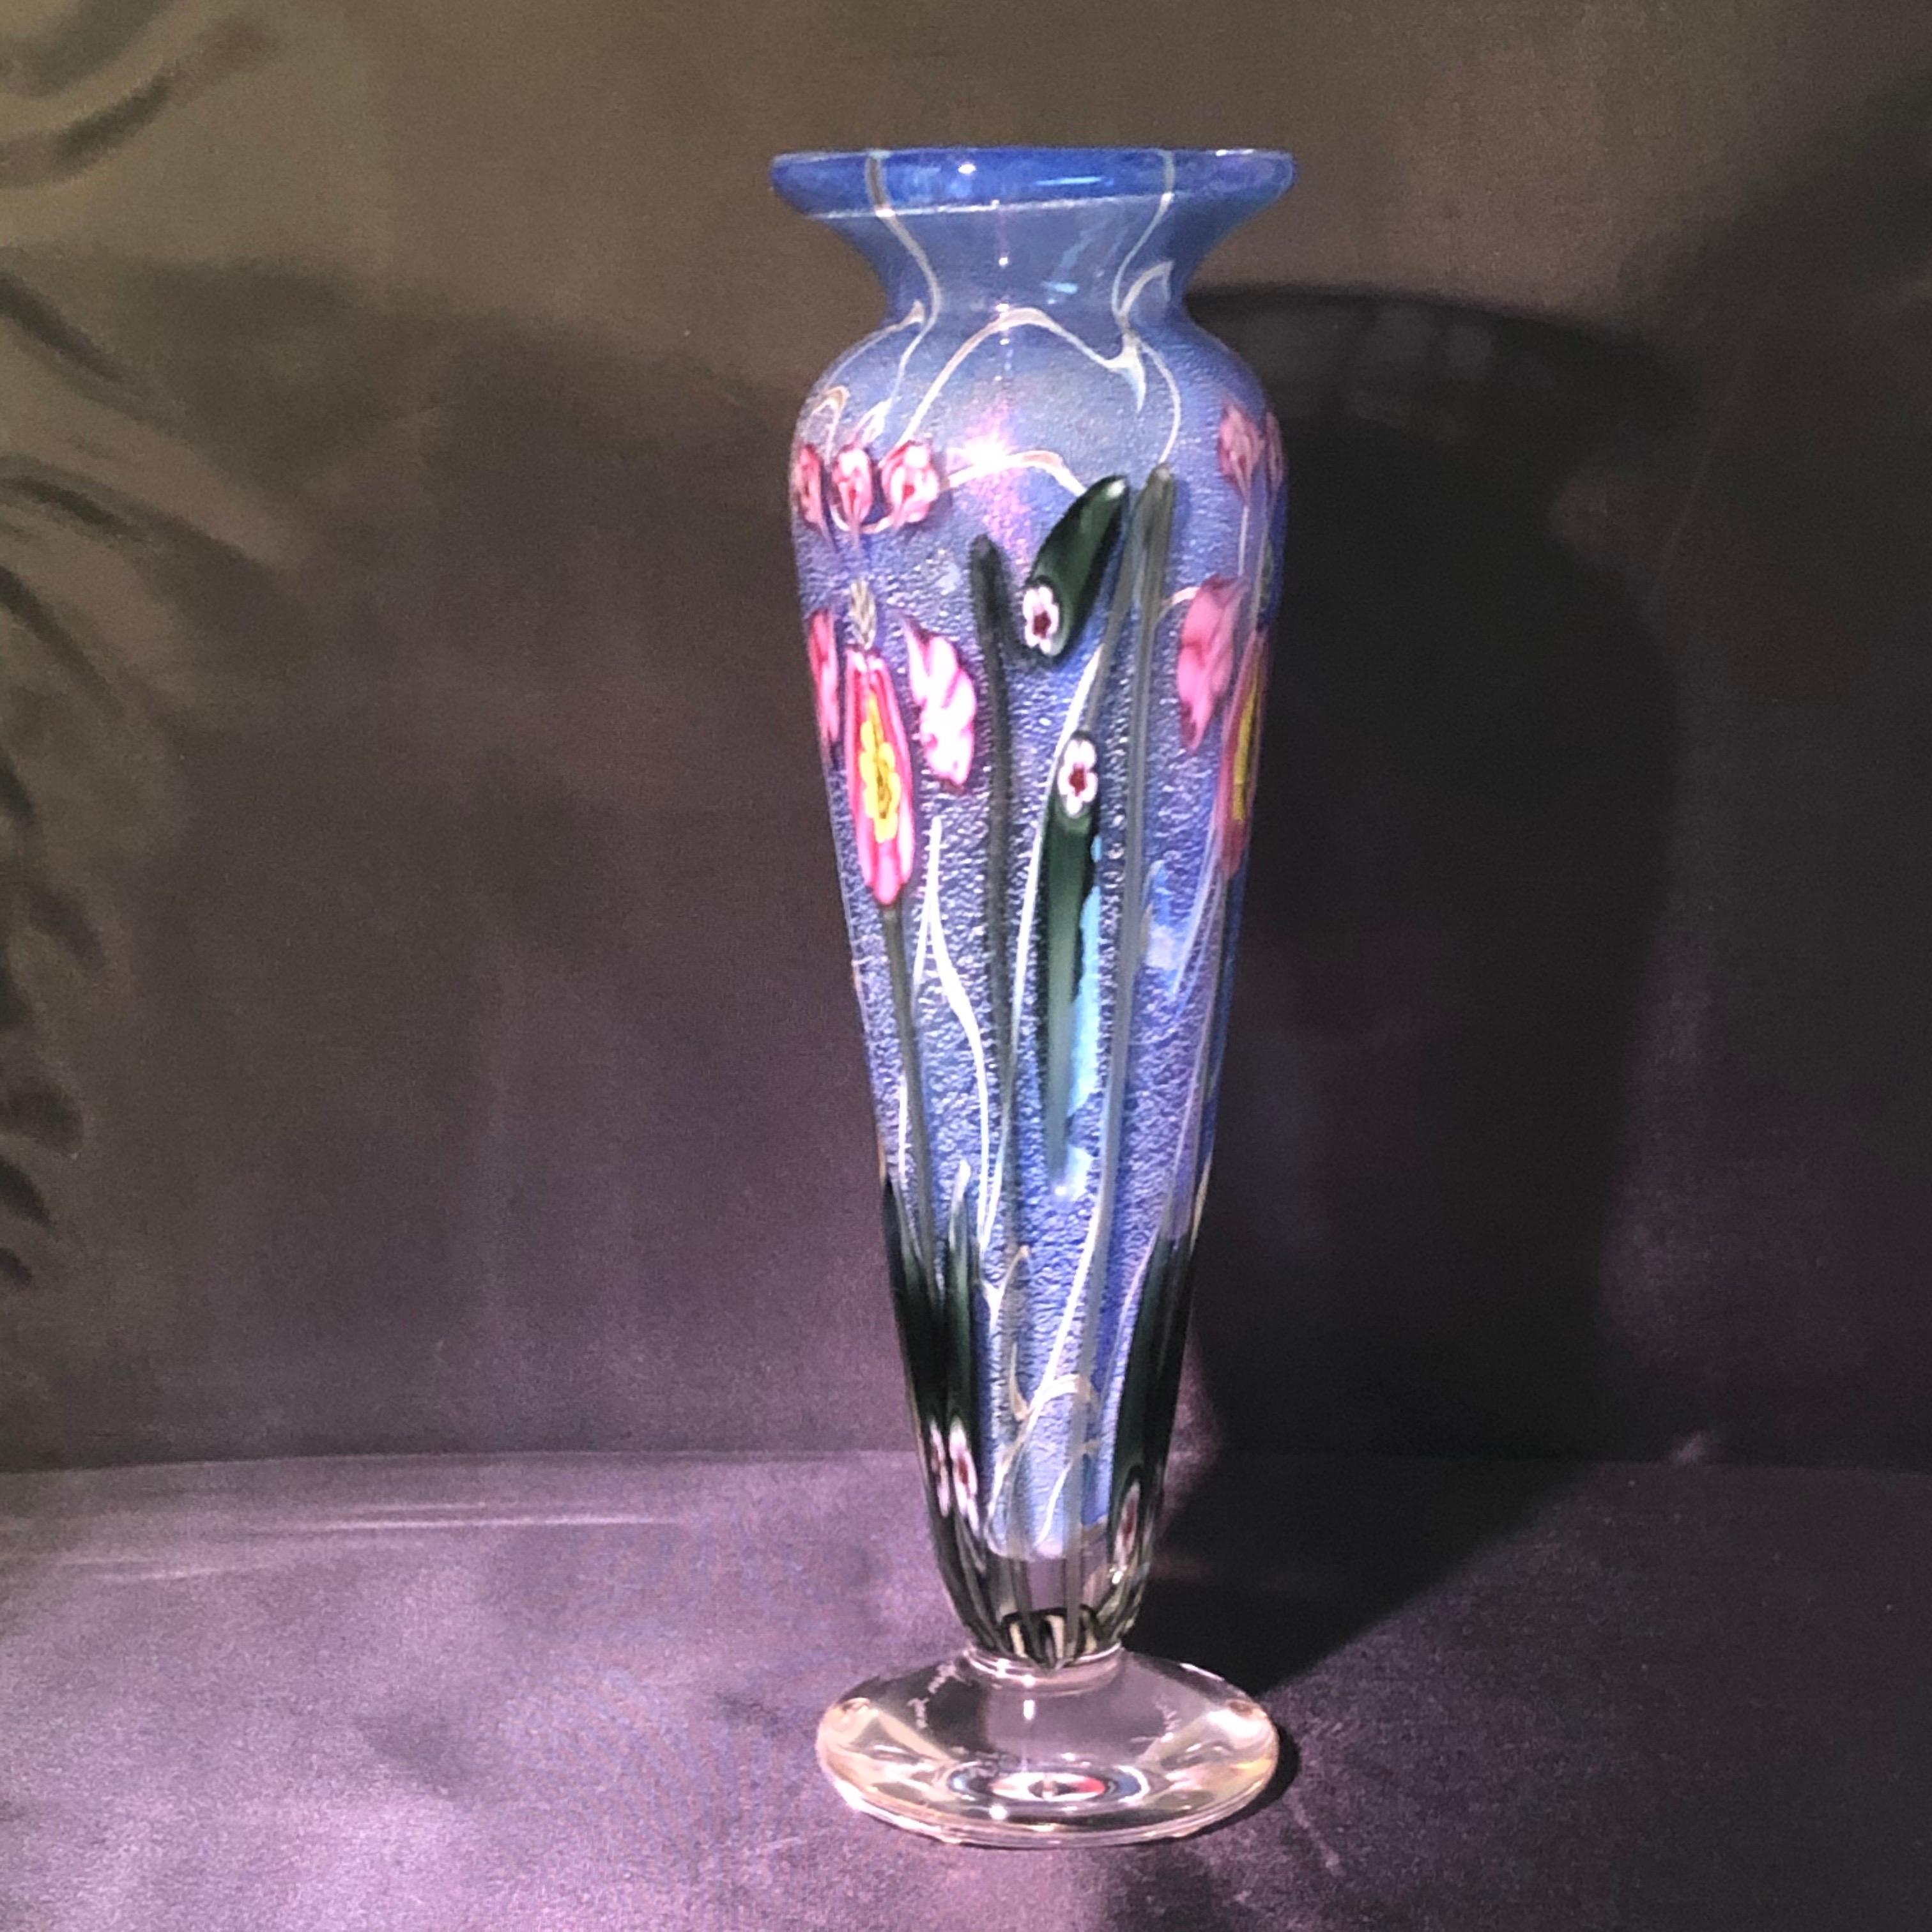 American Vandermark Art Glass Vase Signed by Vandermark, Doug Merritt and Stephen Smarr